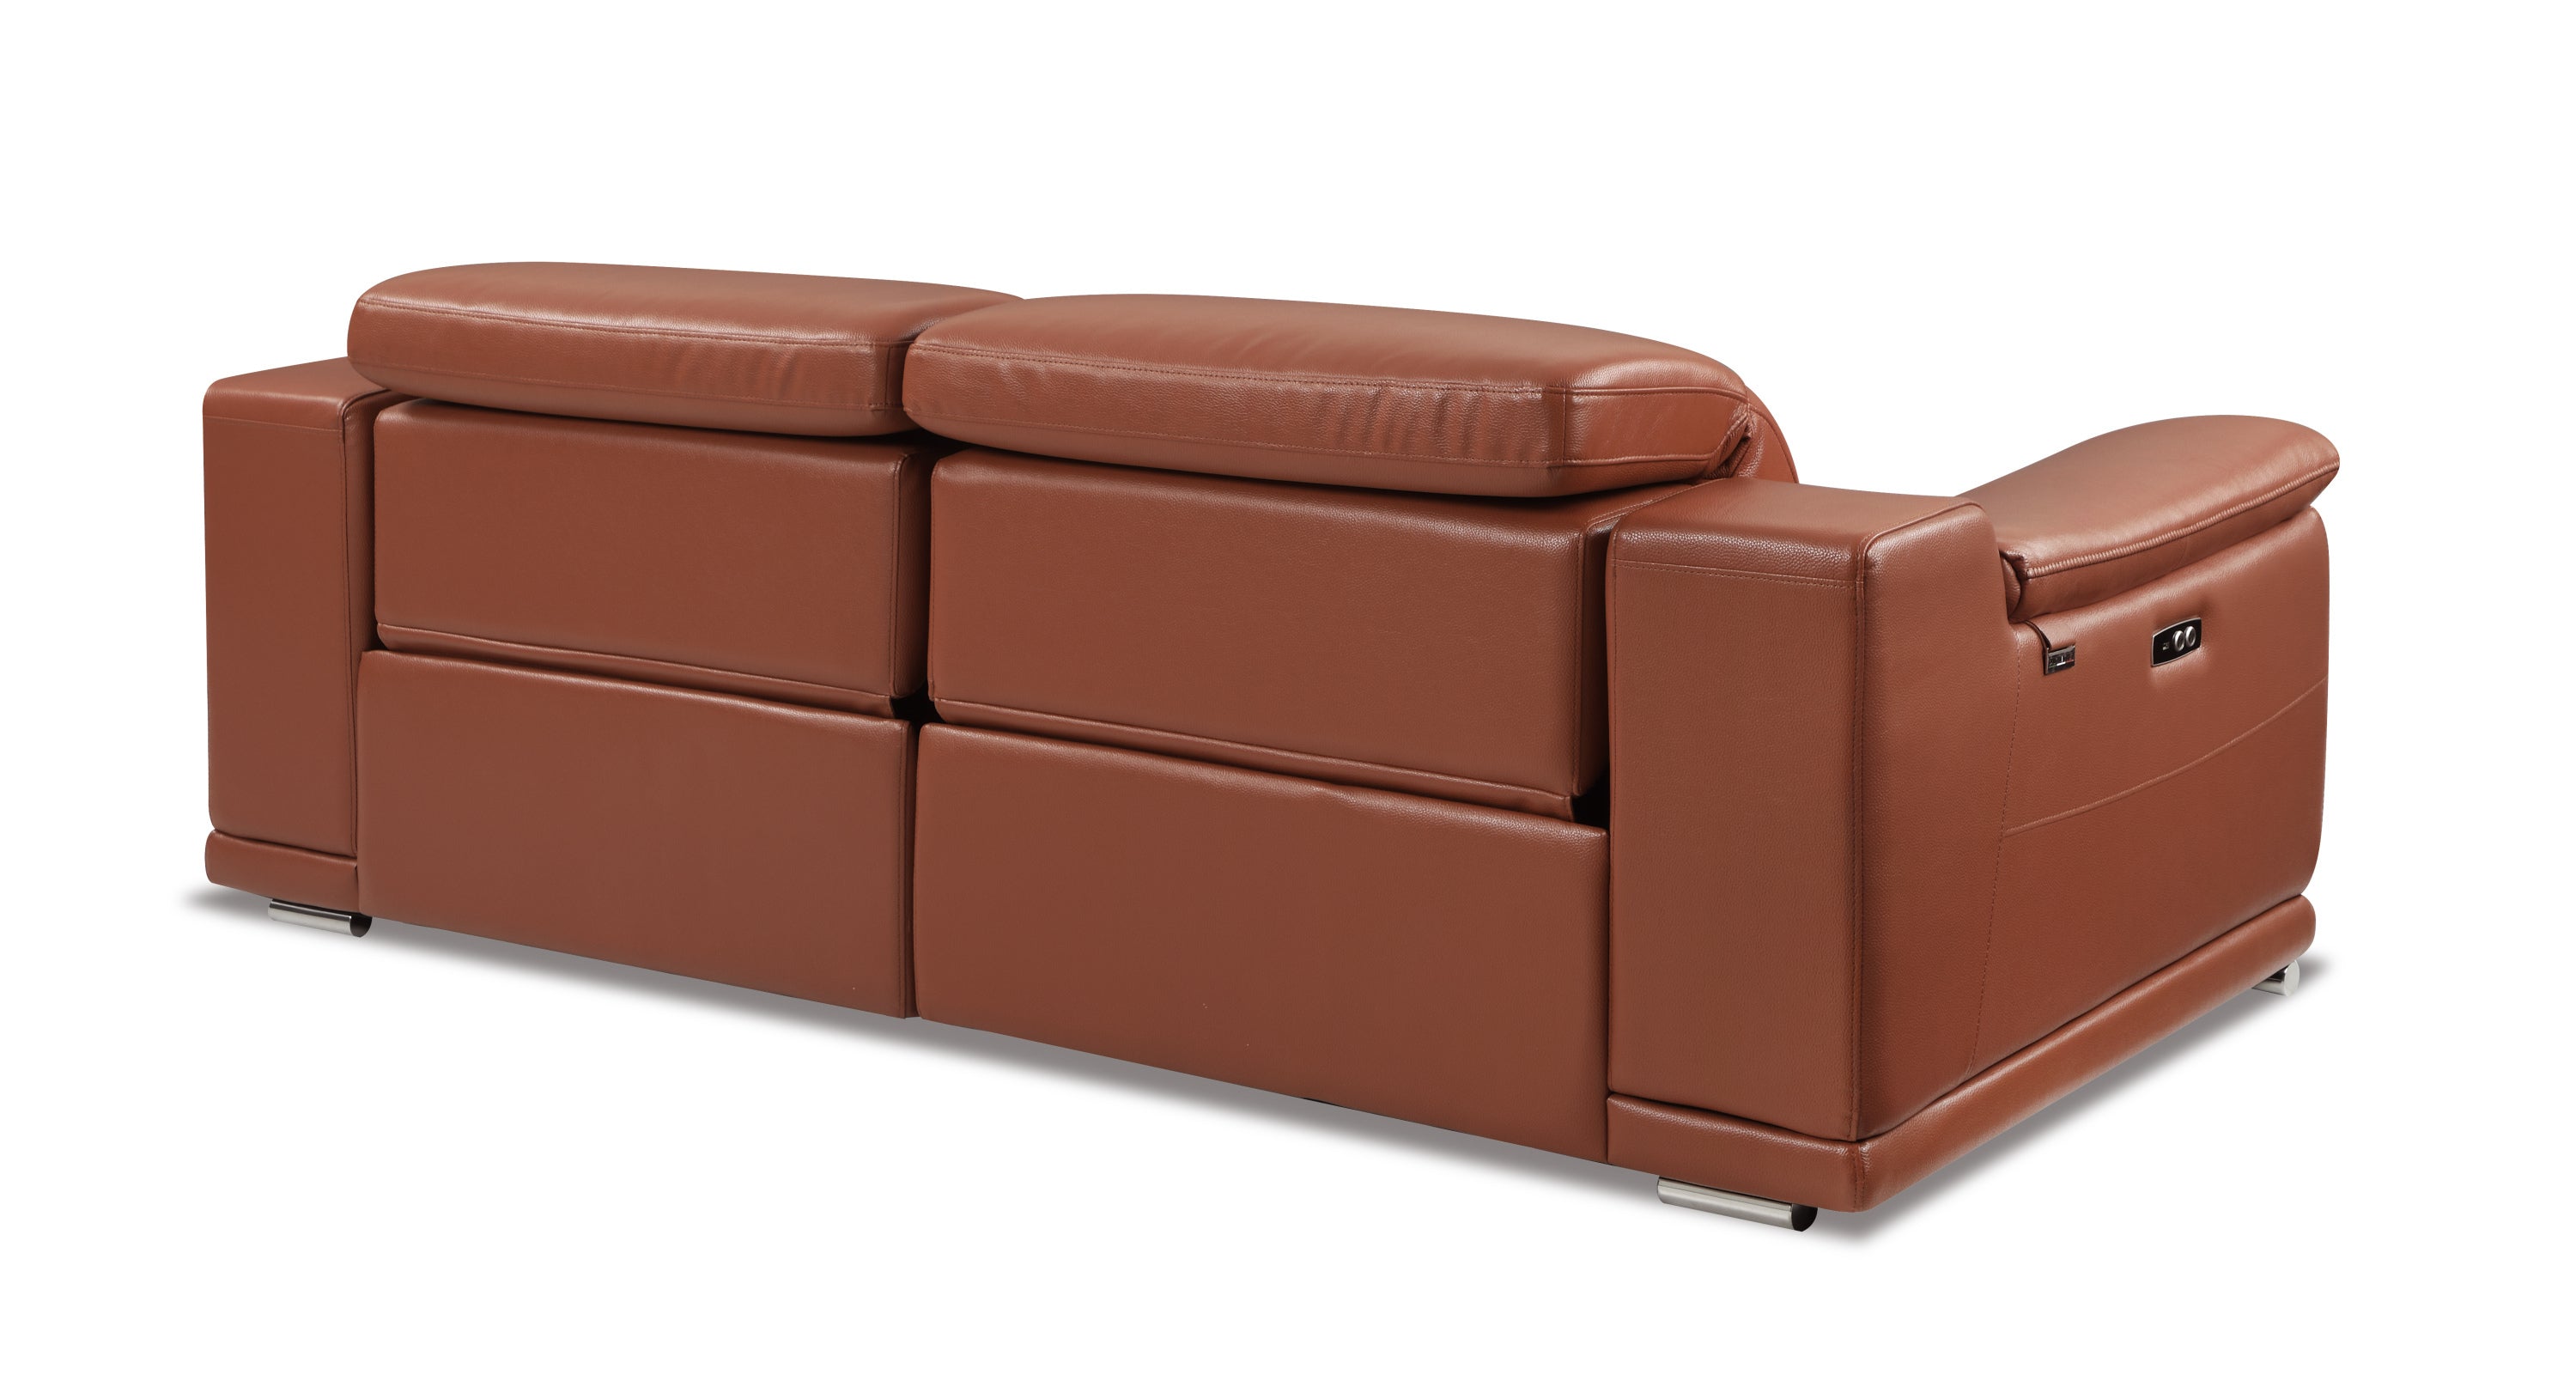 Genuine Italian Leather Power Reclining Sofa